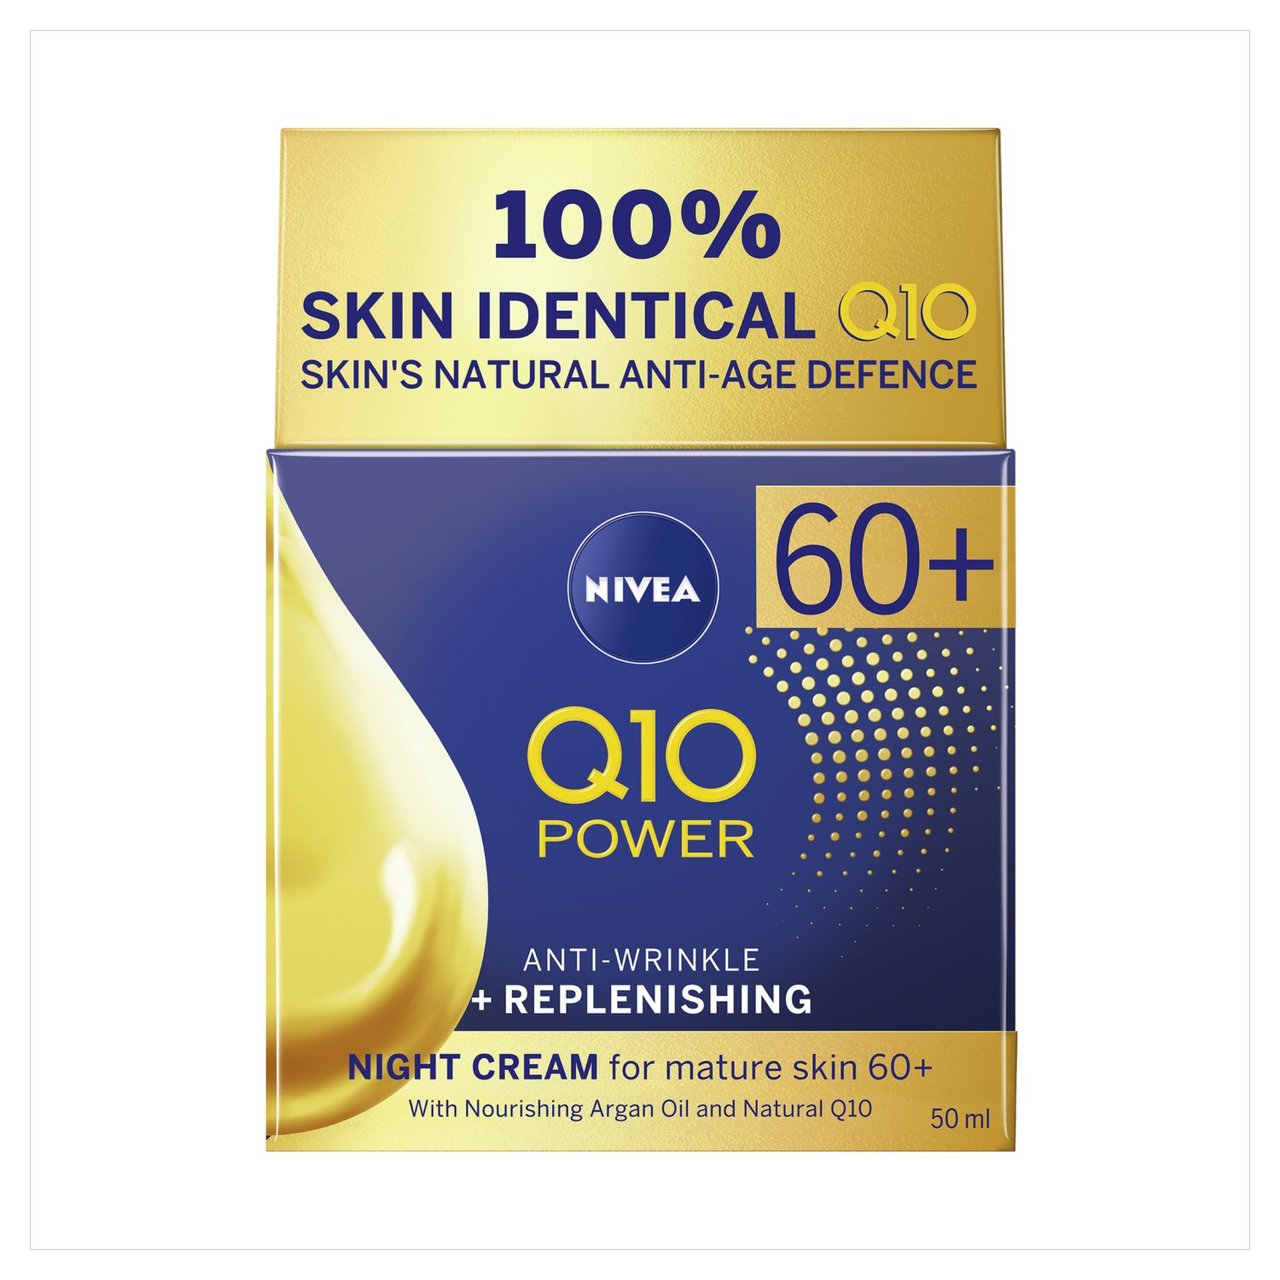 Nivea Q10 Power Anti-Wrinkle + Replenishing 60+ Night Cream 50ml